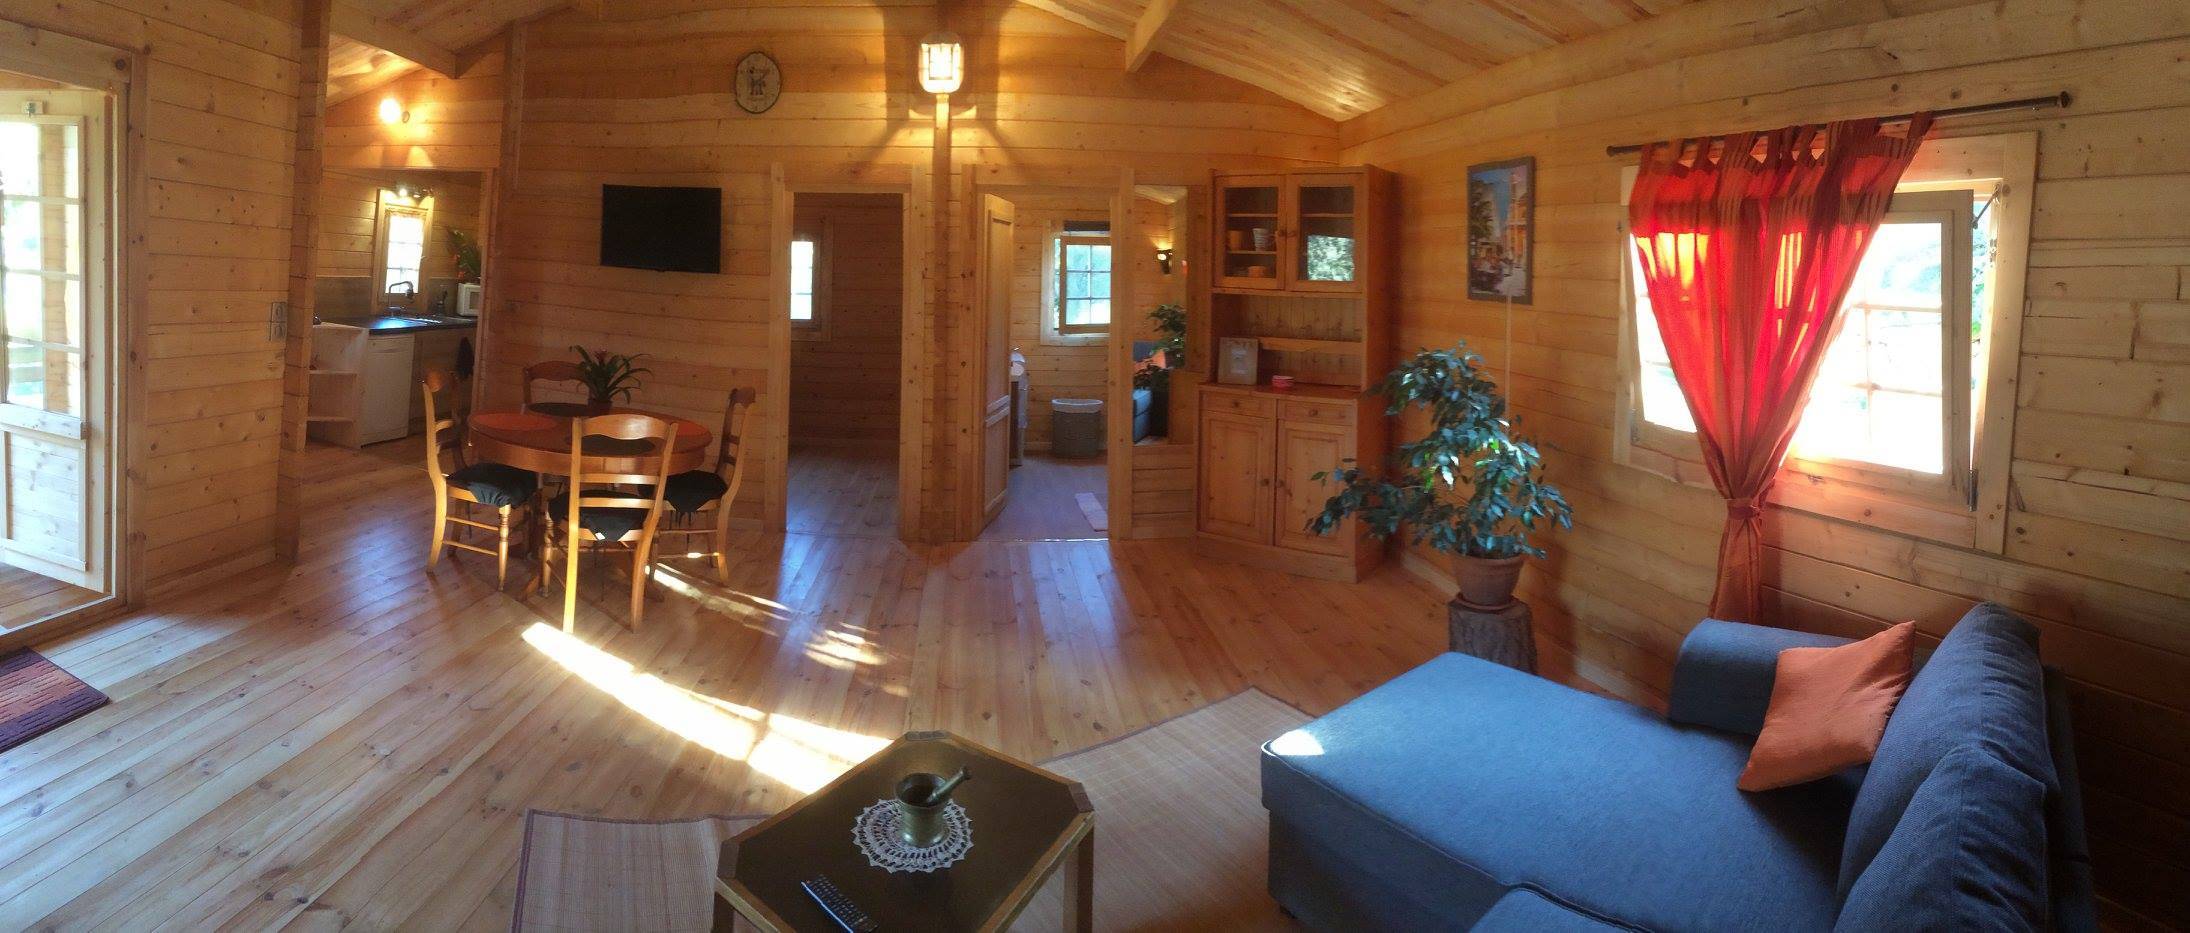 log cabin interior